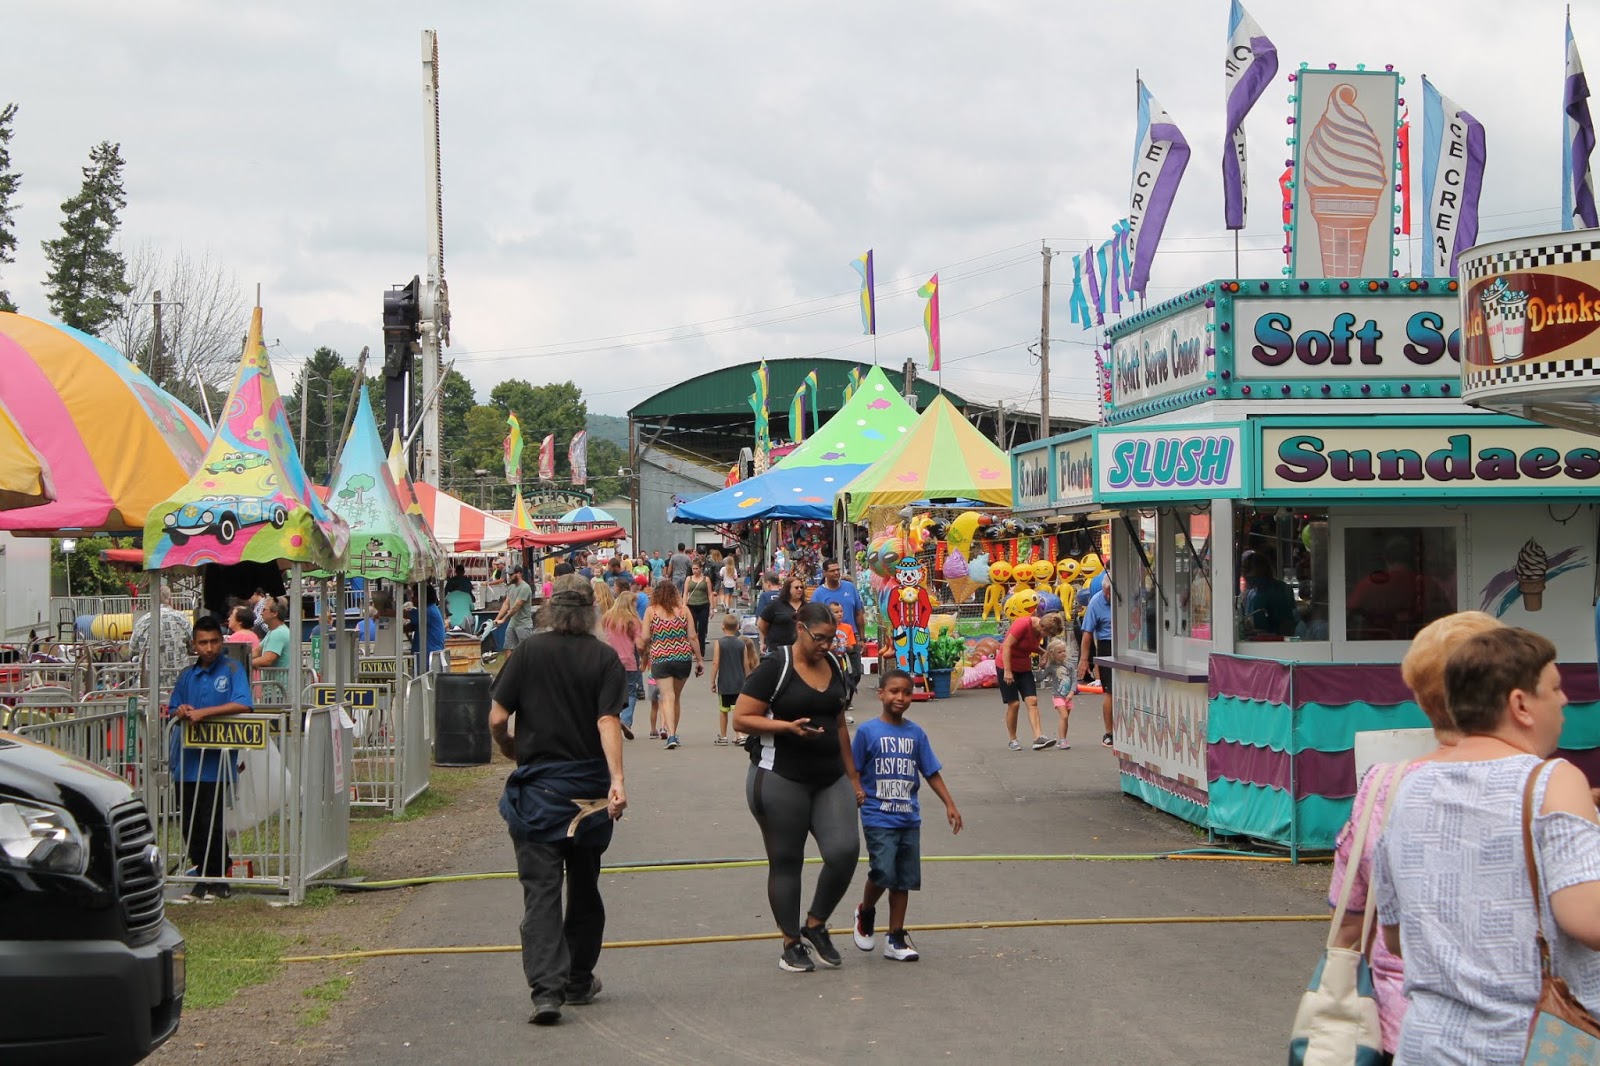 Wellsville Regional News (dot) com Steuben County Fair draws crowds Sunday